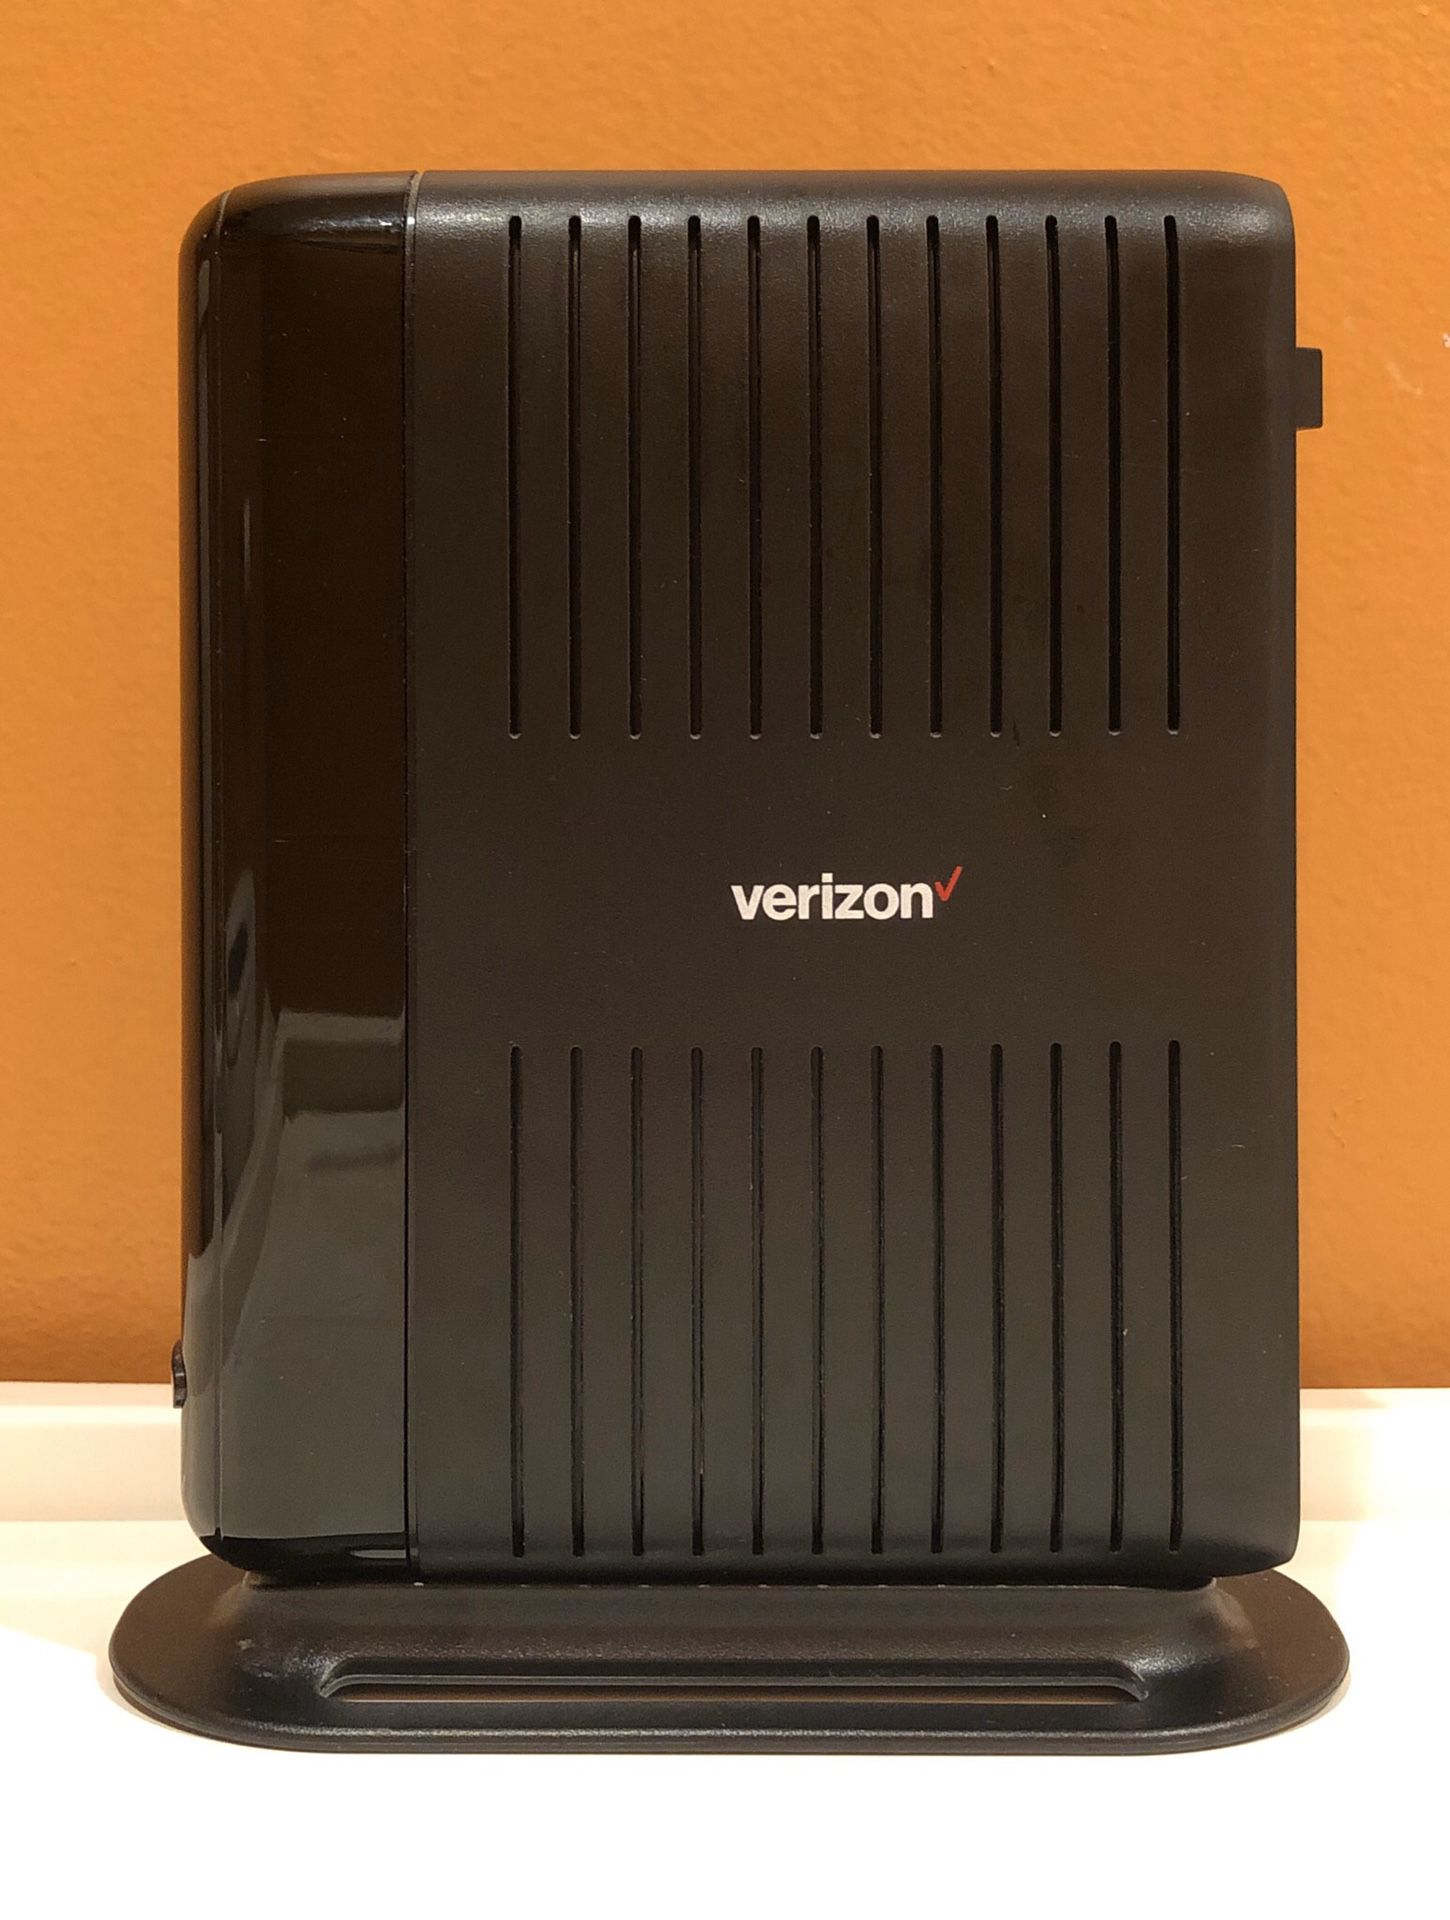 Verizon GT784 WNV DSL Modem/Router